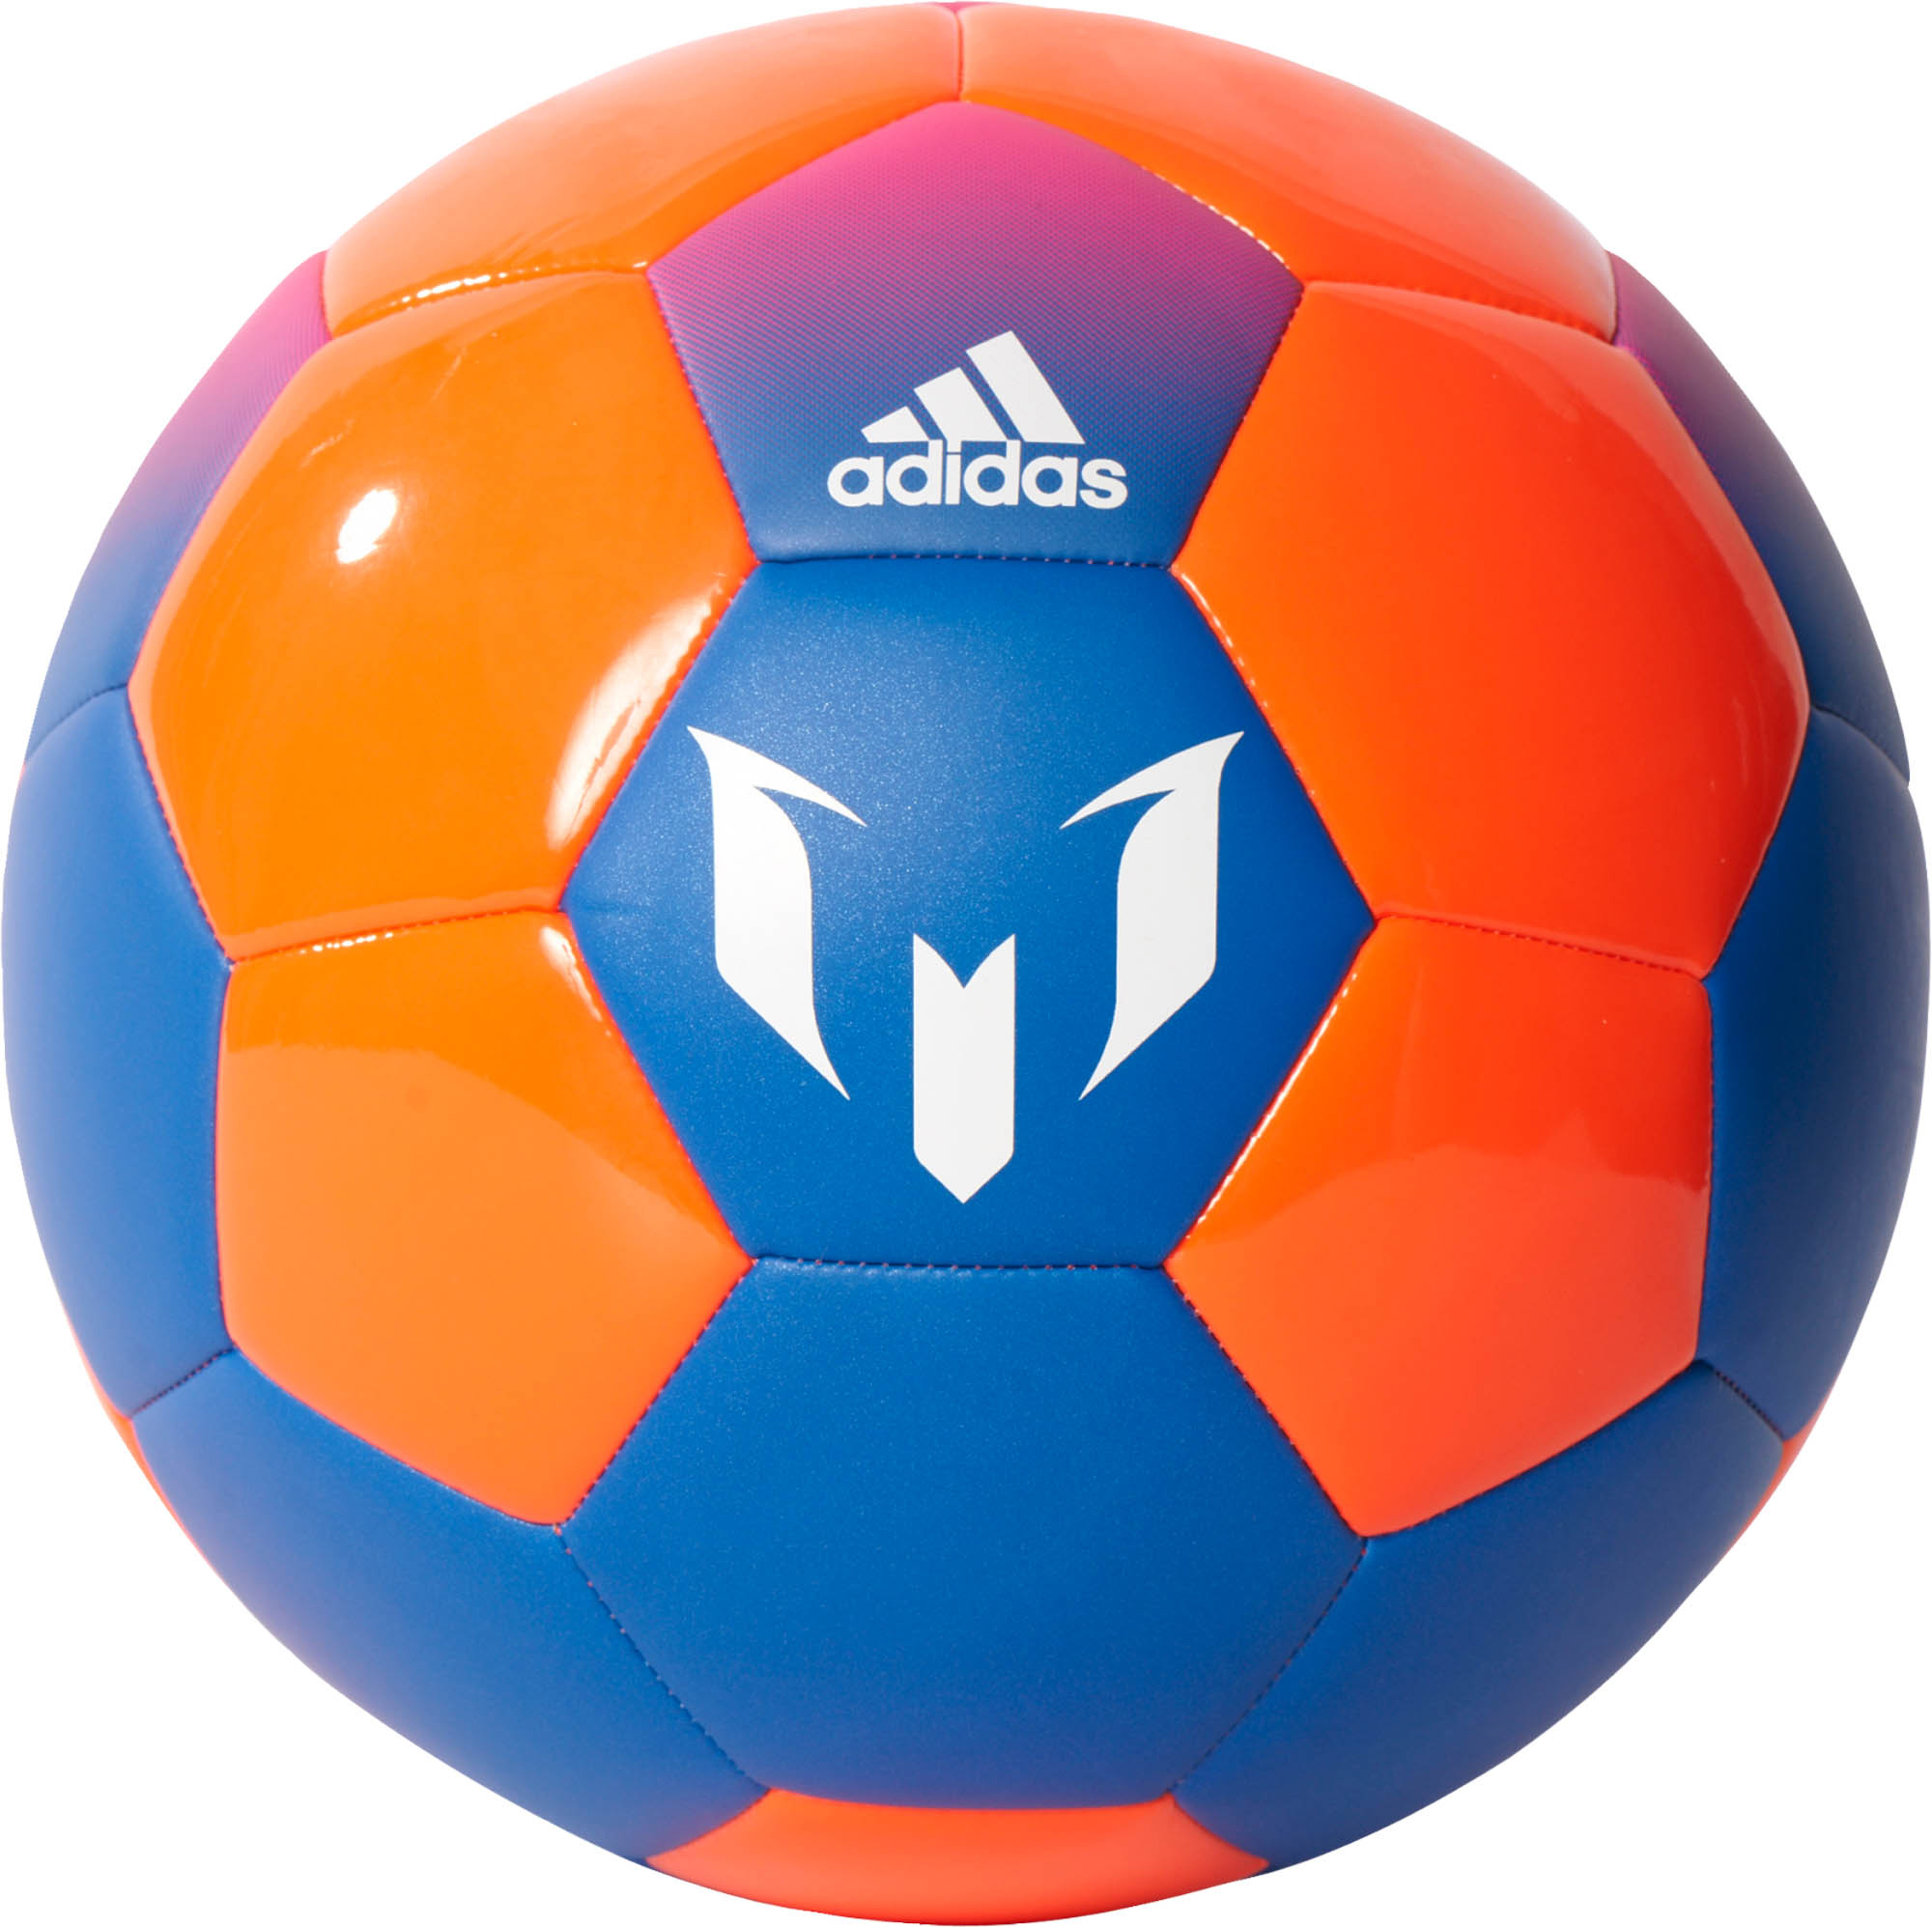 adidas Messi Soccer Ball - Blue adidas 